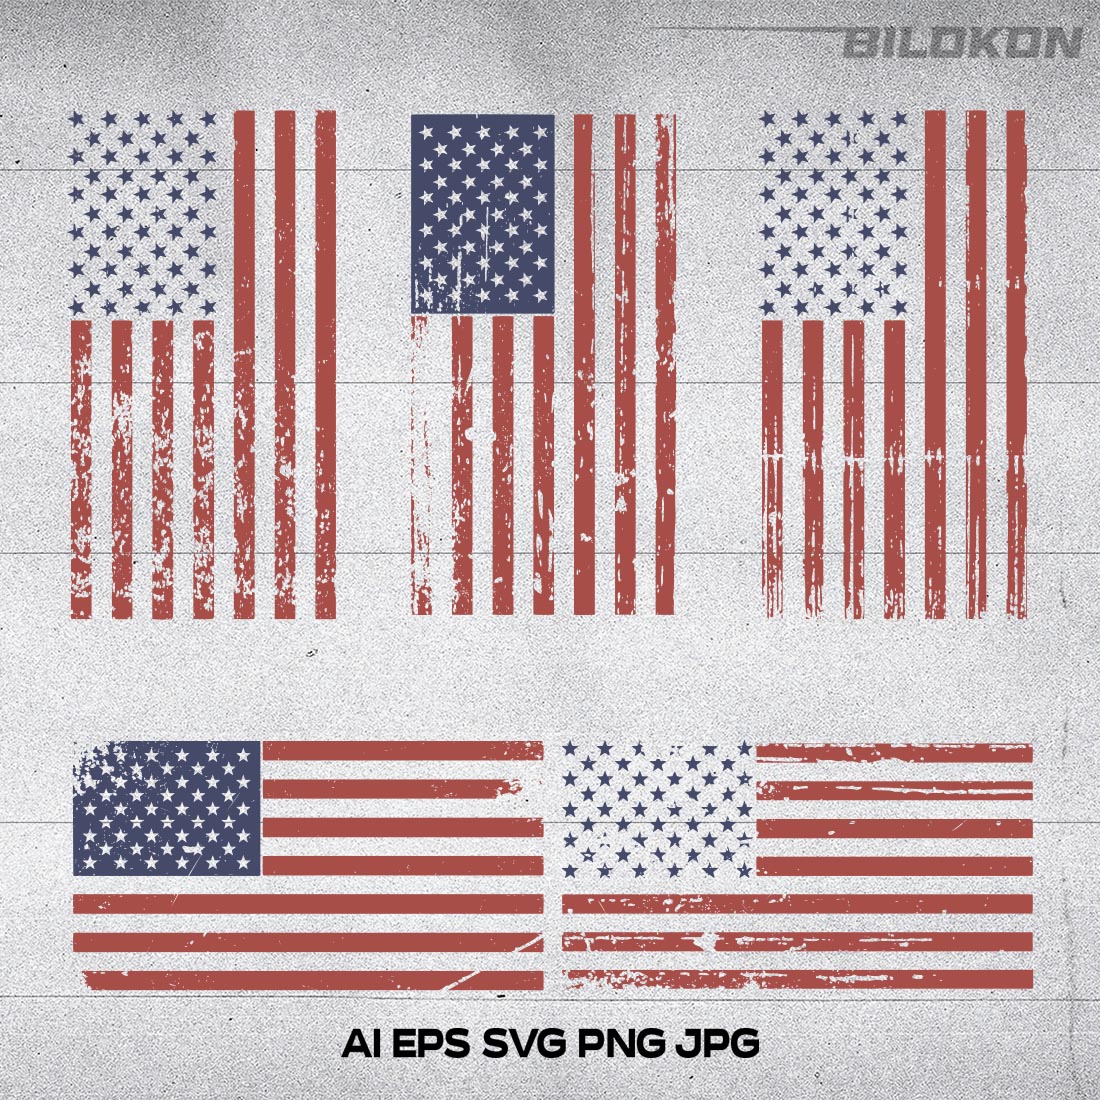 Grunge American flag, USA flag, SVG Vector cover image.